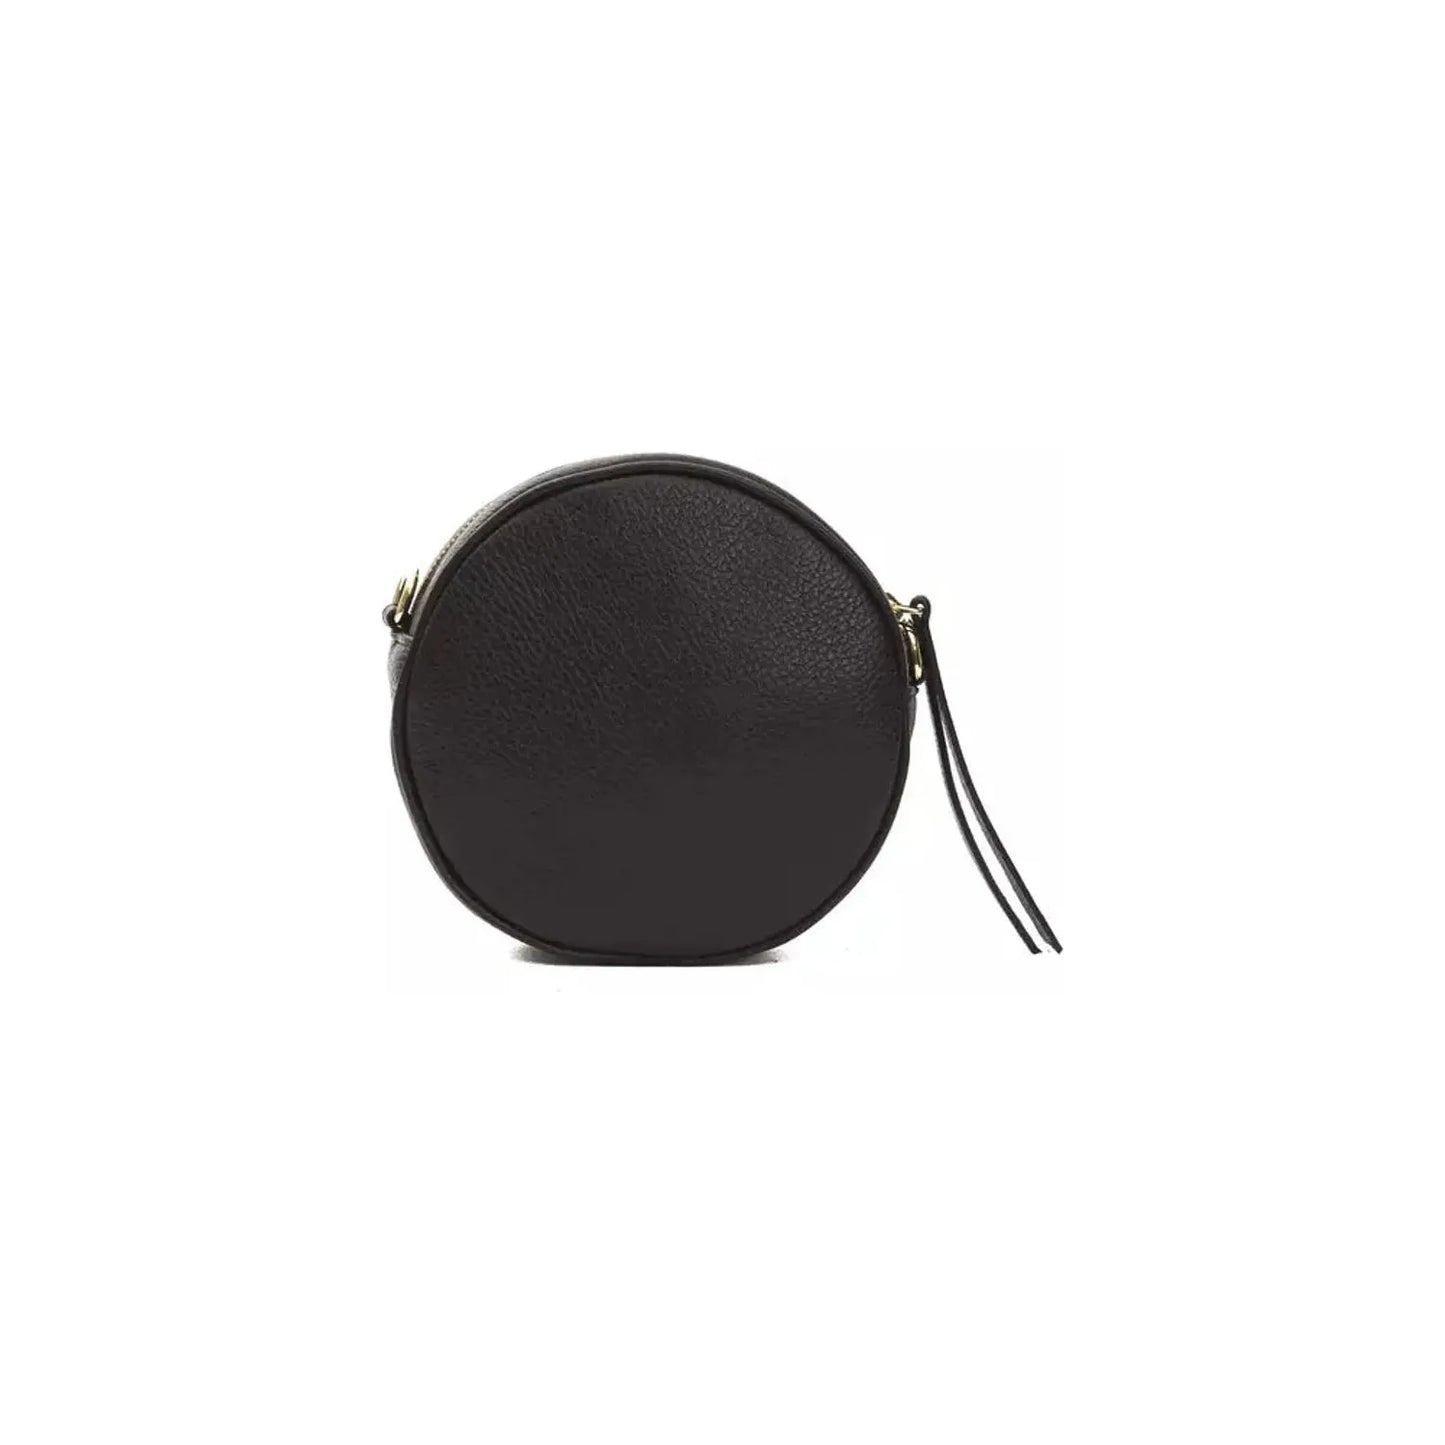 Pompei Donatella Small Oval Leather Crossbody Elegance black-leather-crossbody-bag Crossbody Bag stock_product_image_5813_1945826009-22-80670525-42c.webp